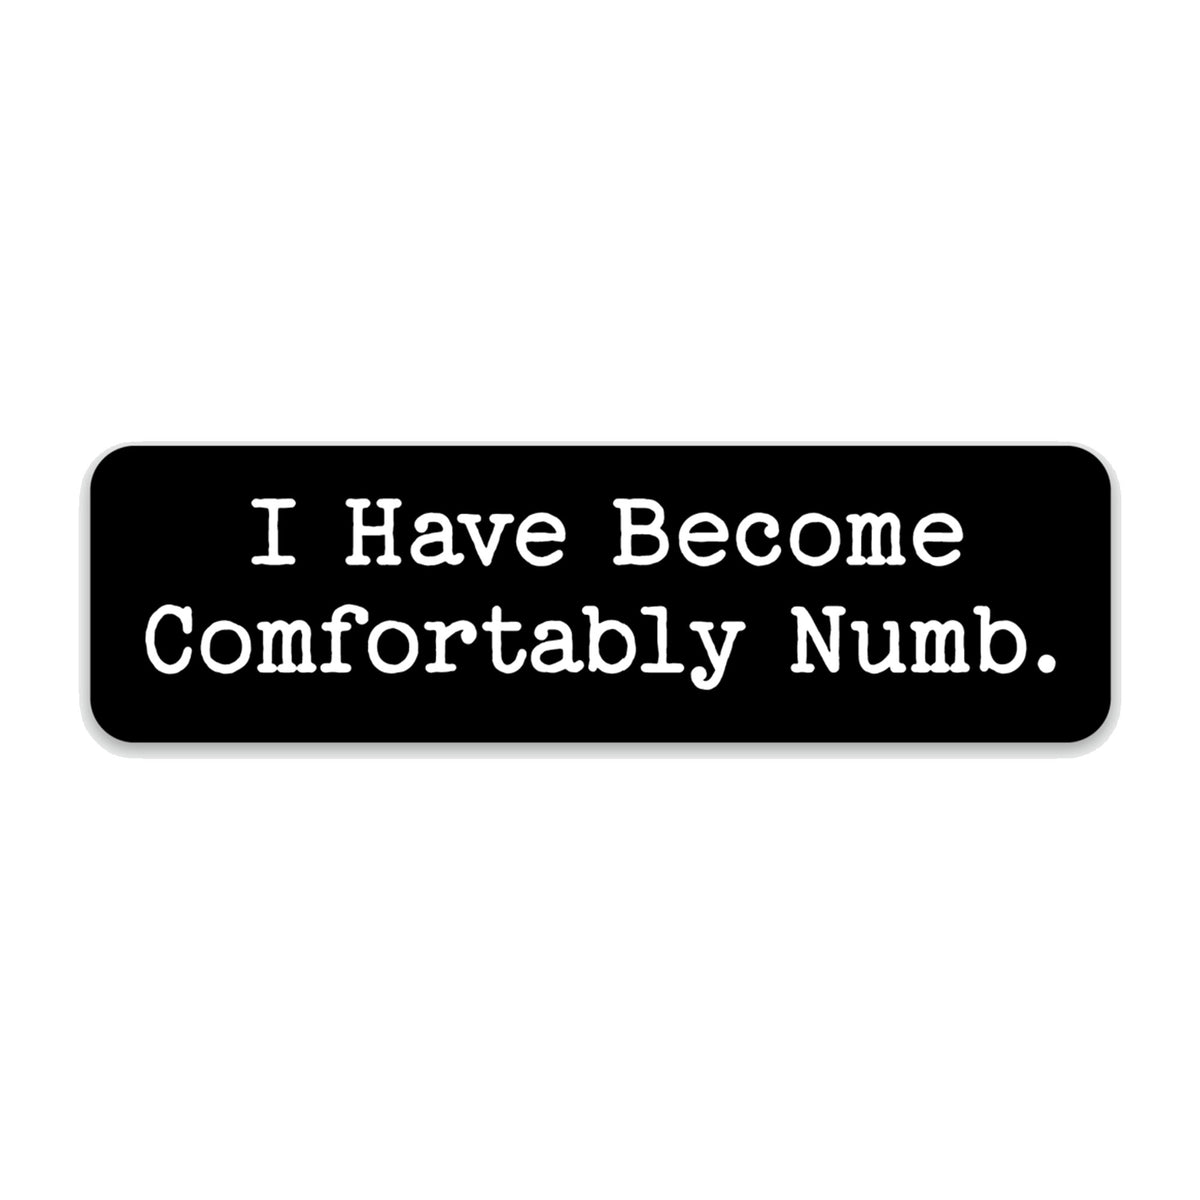 Uncomfortably Numb